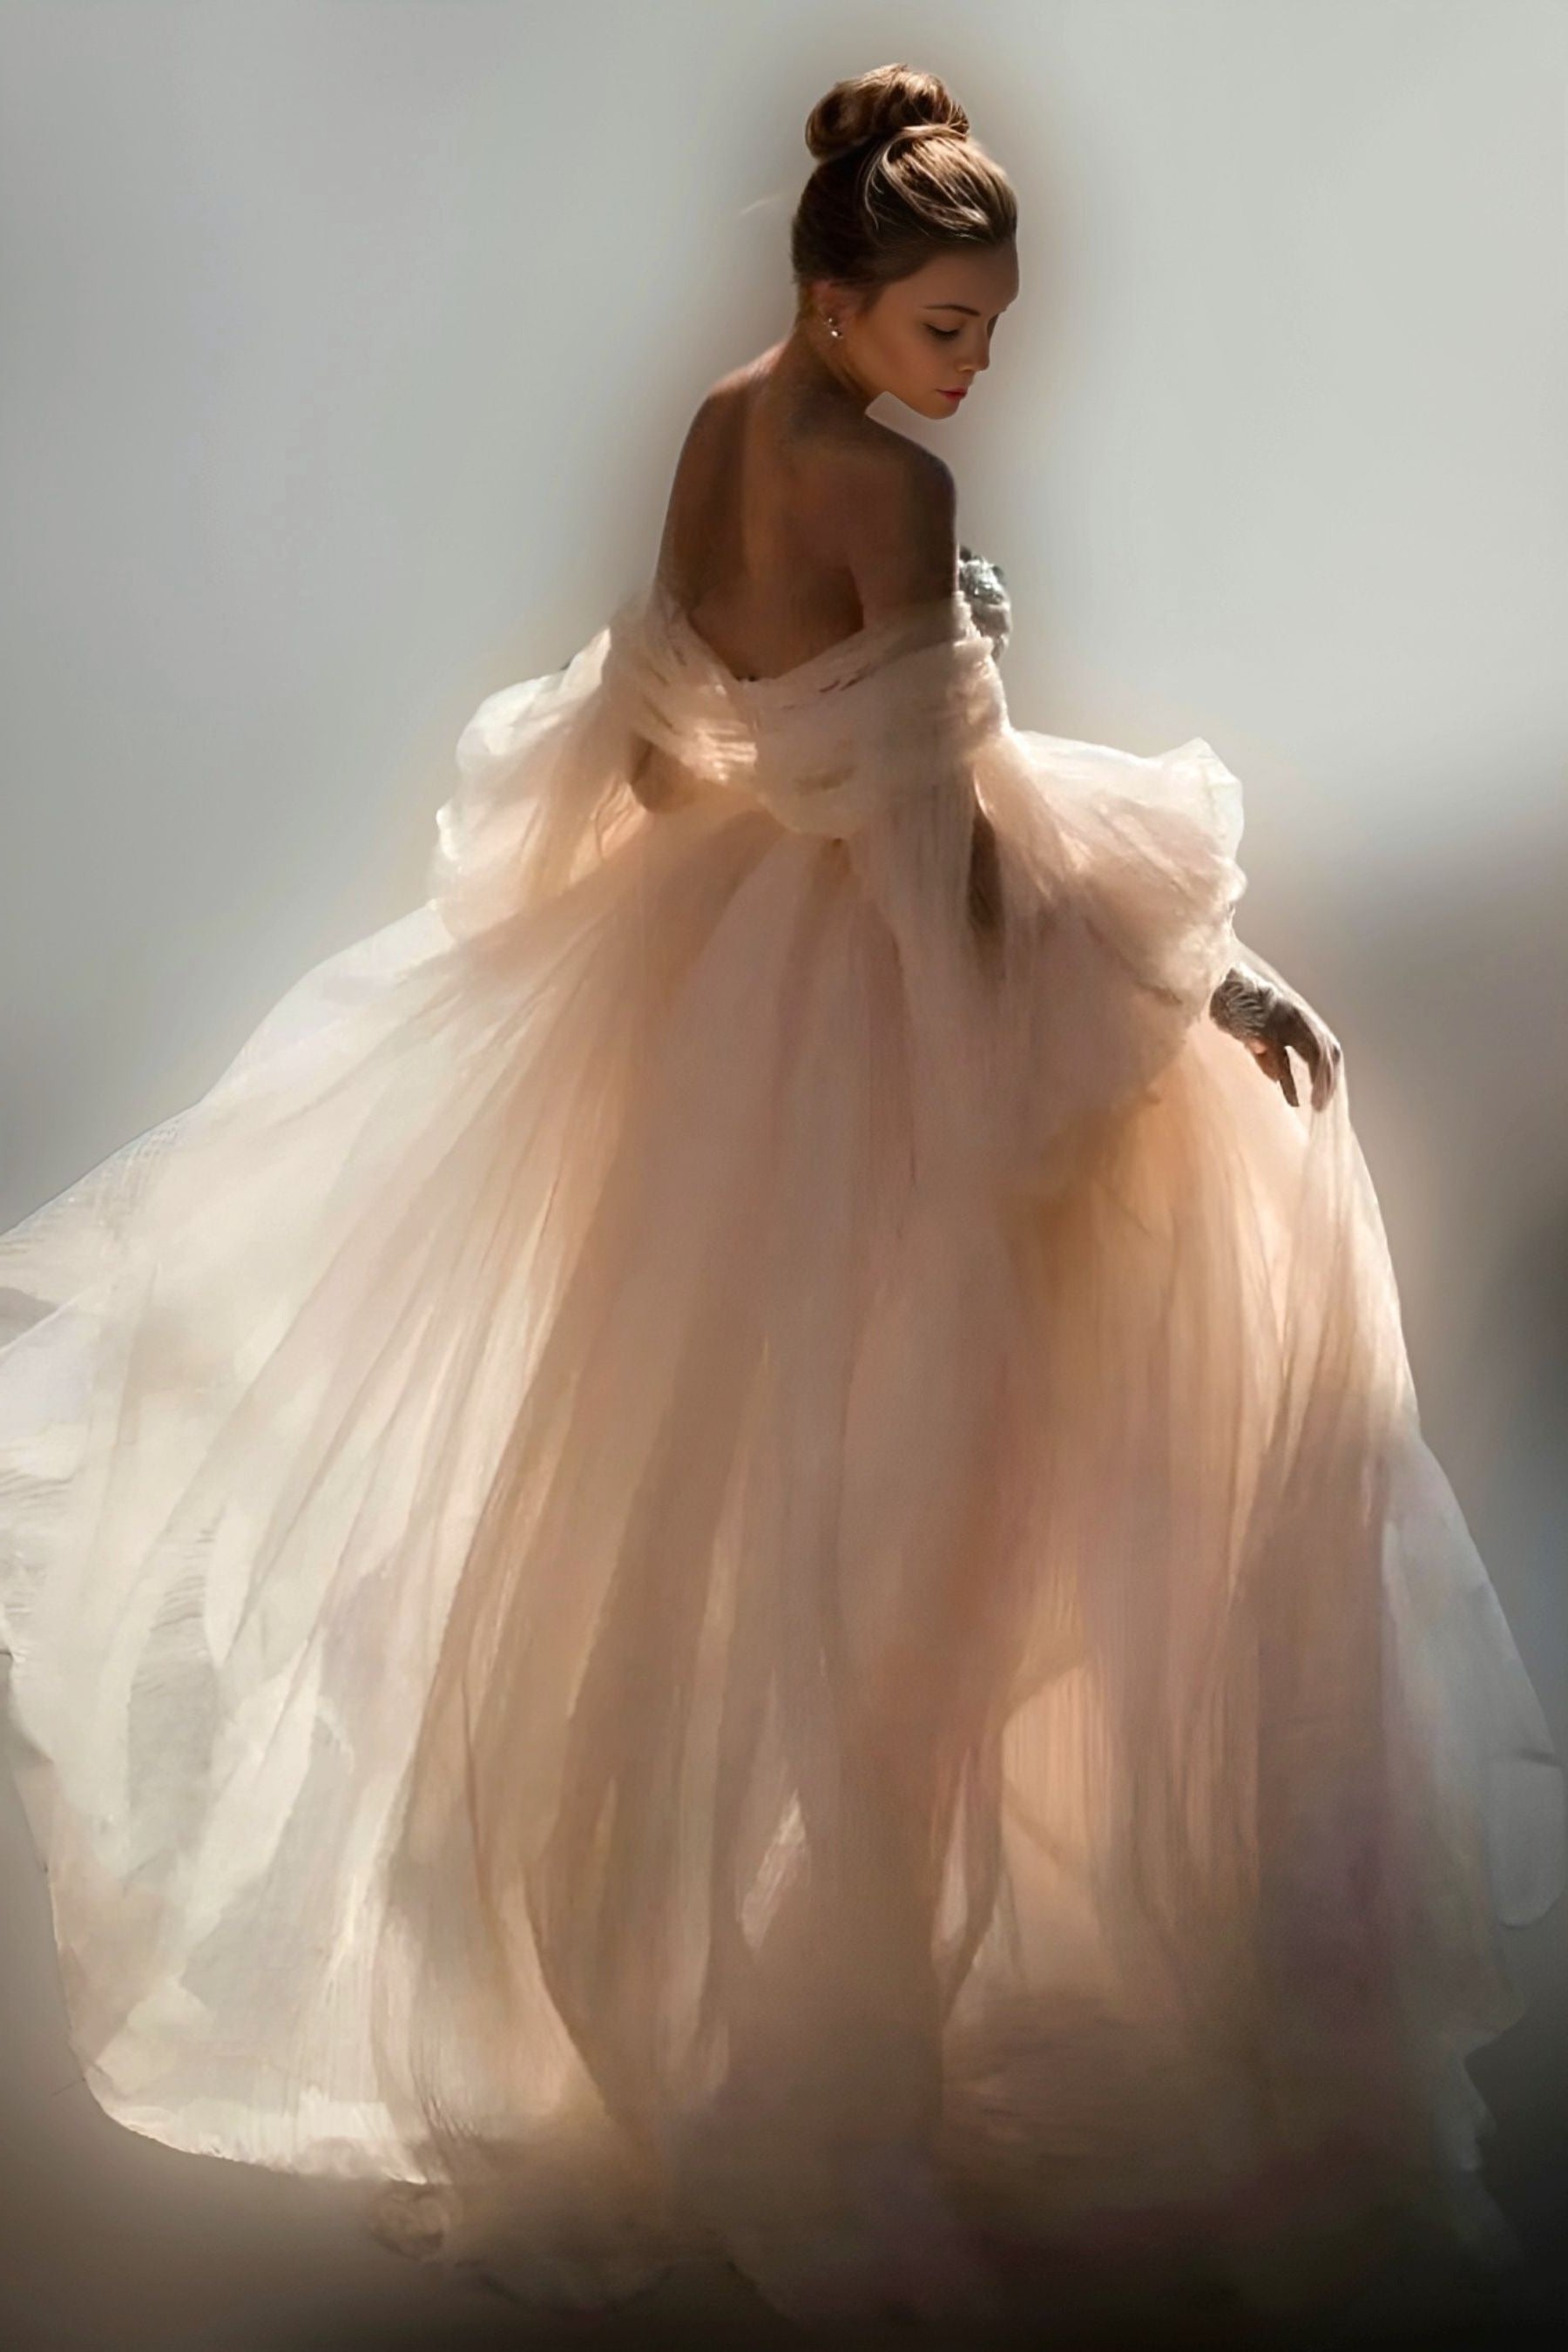 LULA Bridal - MATTIE Short Wedding Dress  Knee Length Bridal Gown – Lula  Bridal